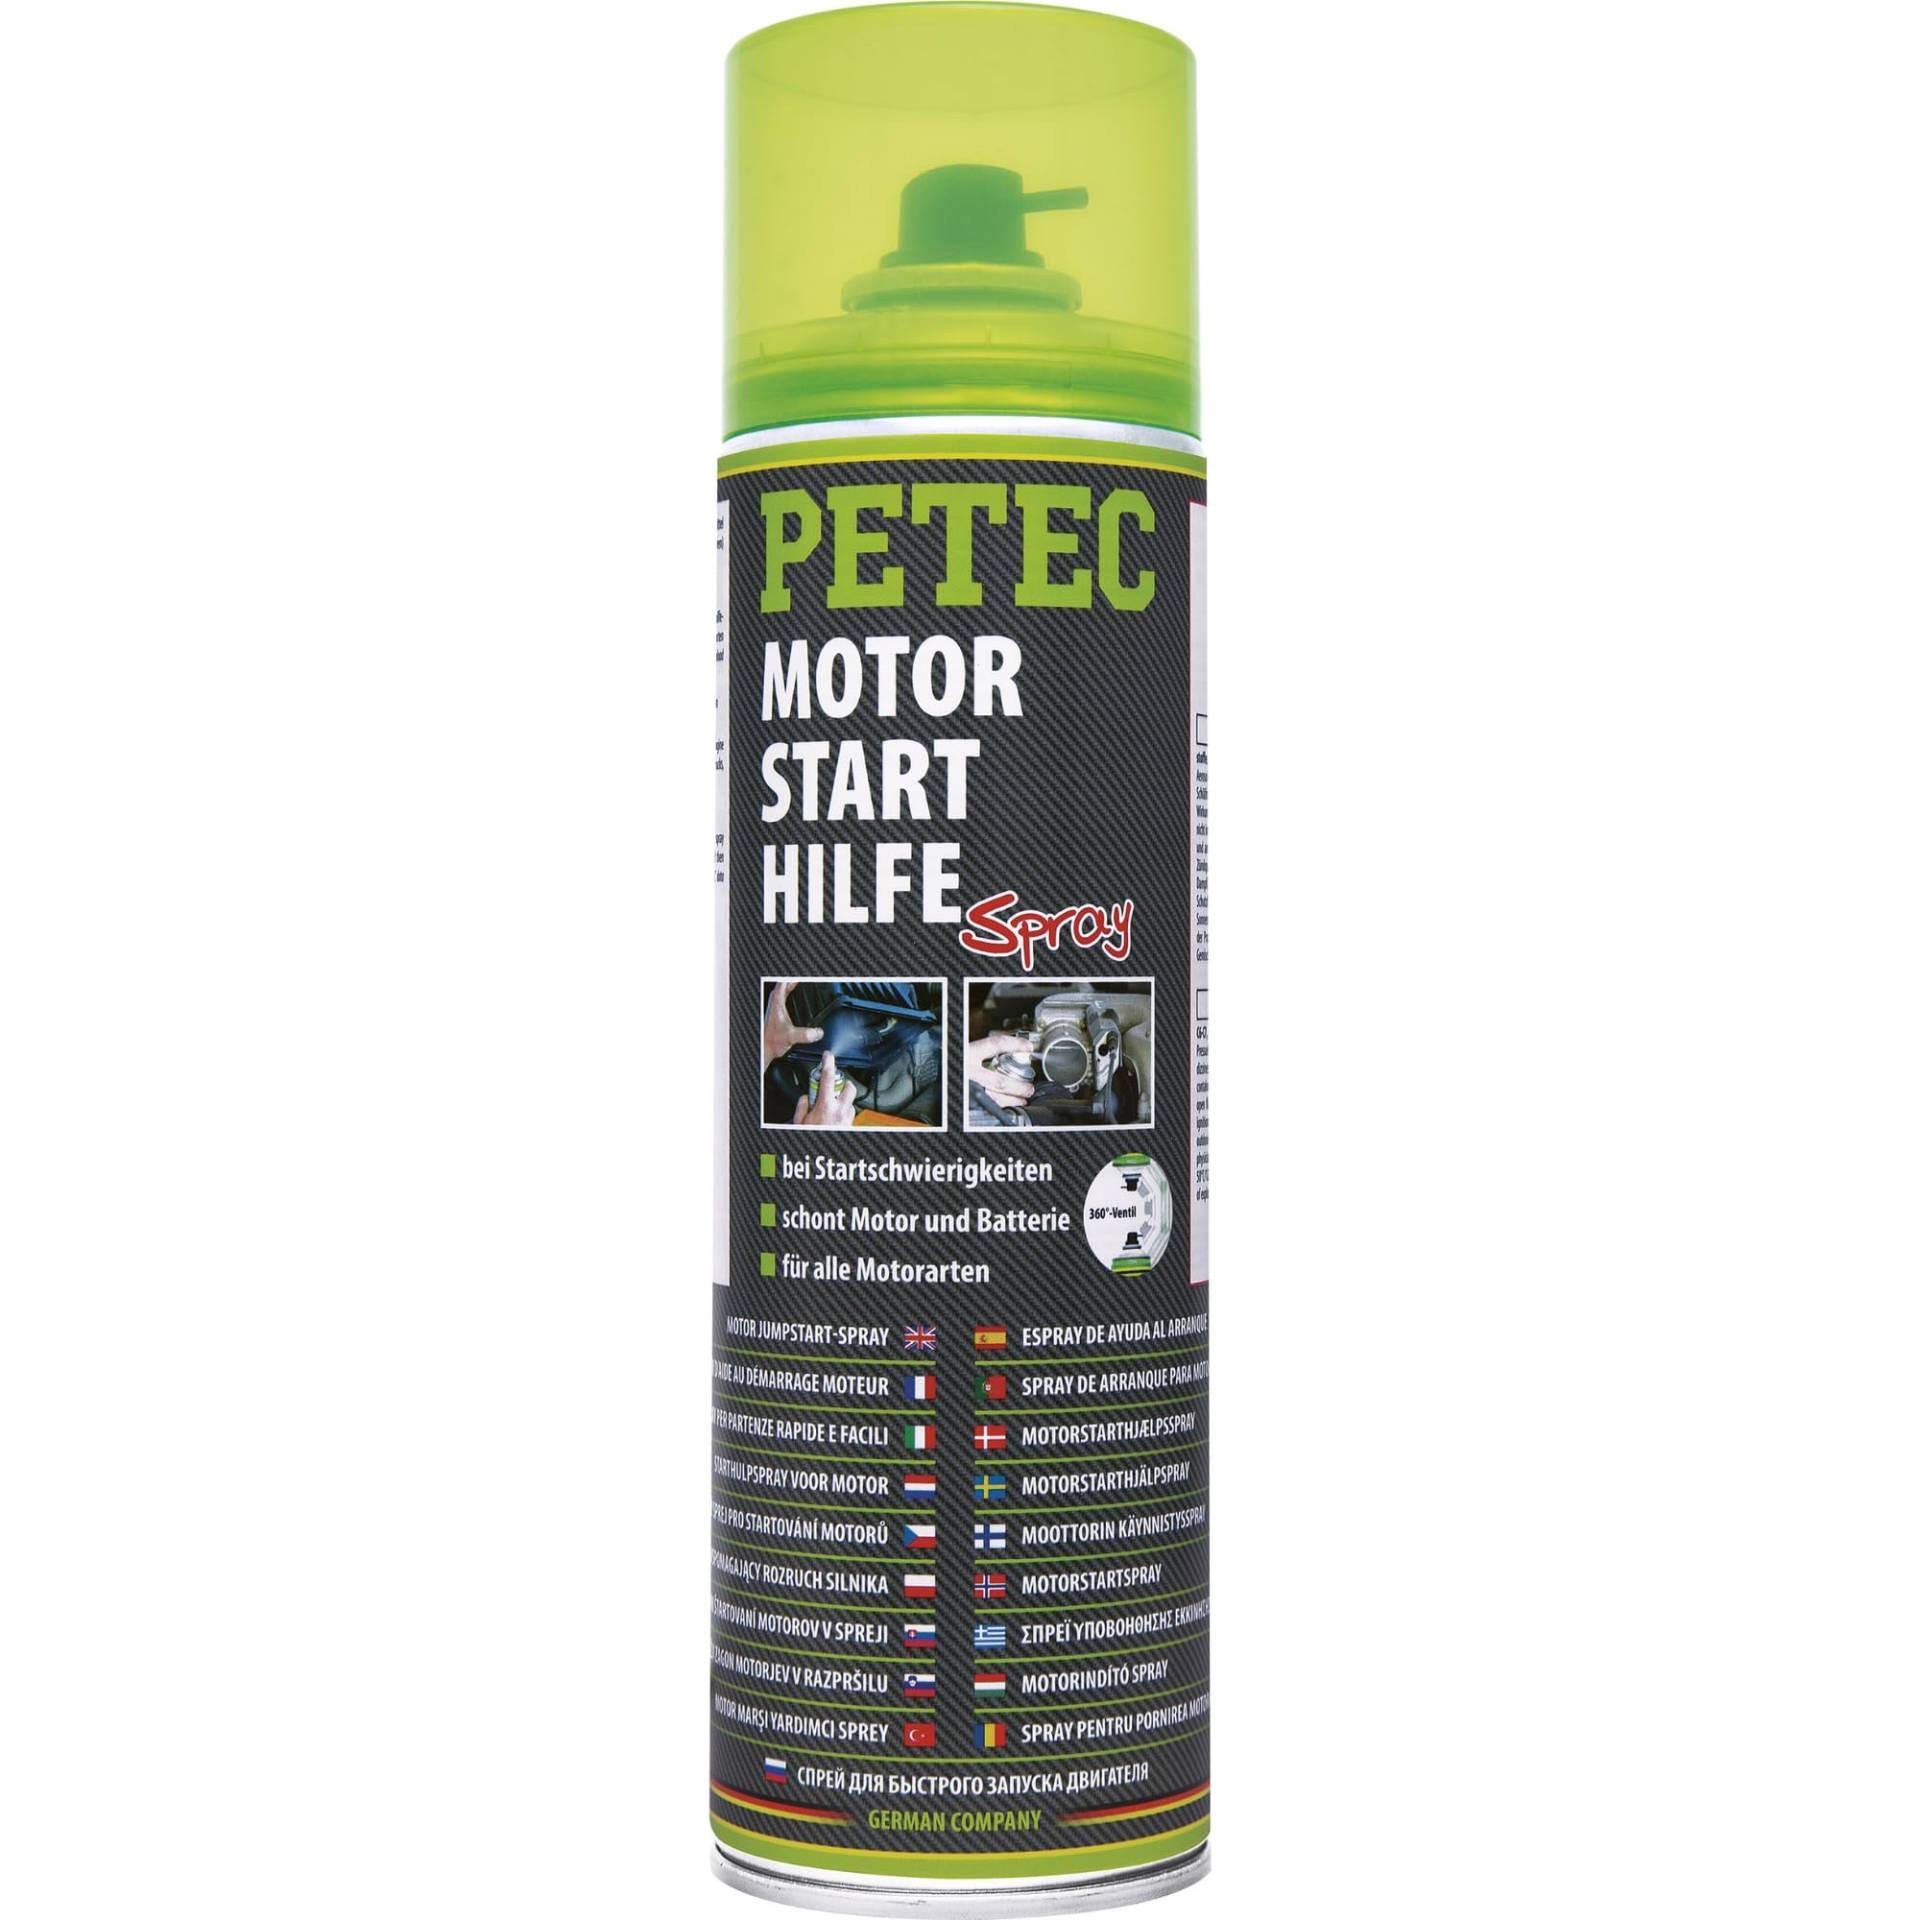 PETEC Motorstarthilfe Spray, 500 ml 70450 von PETEC